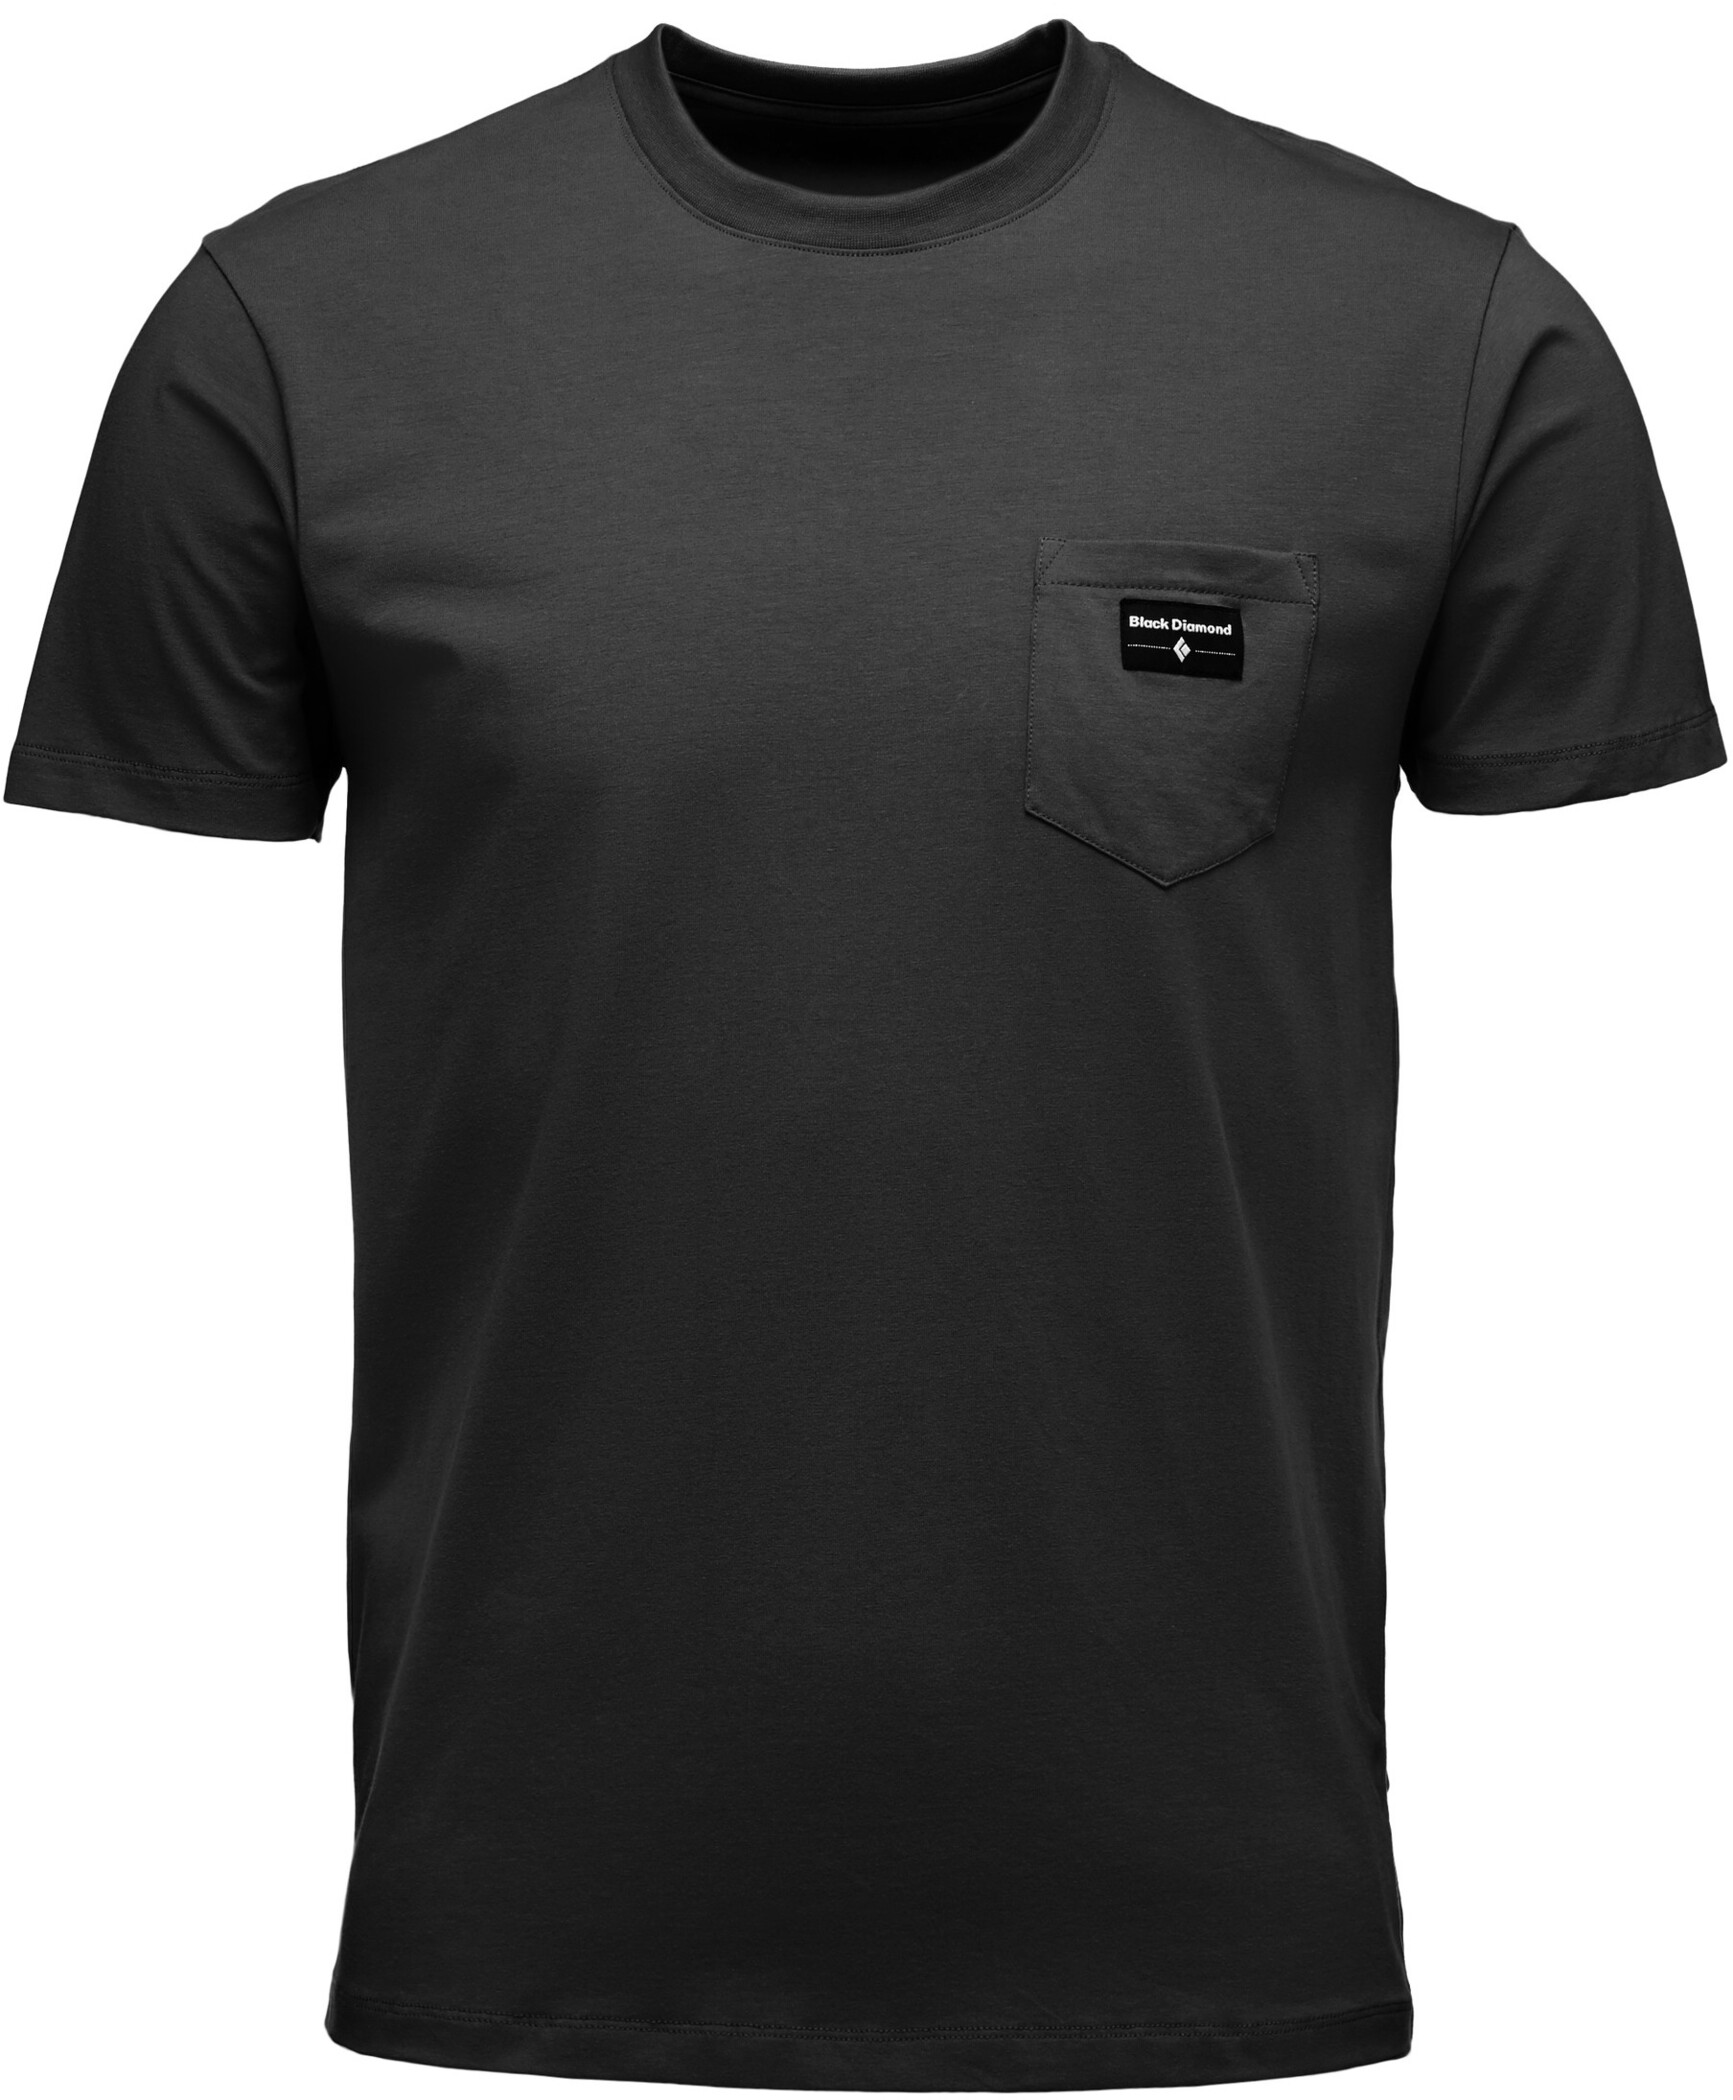 Black Diamond Pocket Label T-Shirt Herren schwarz